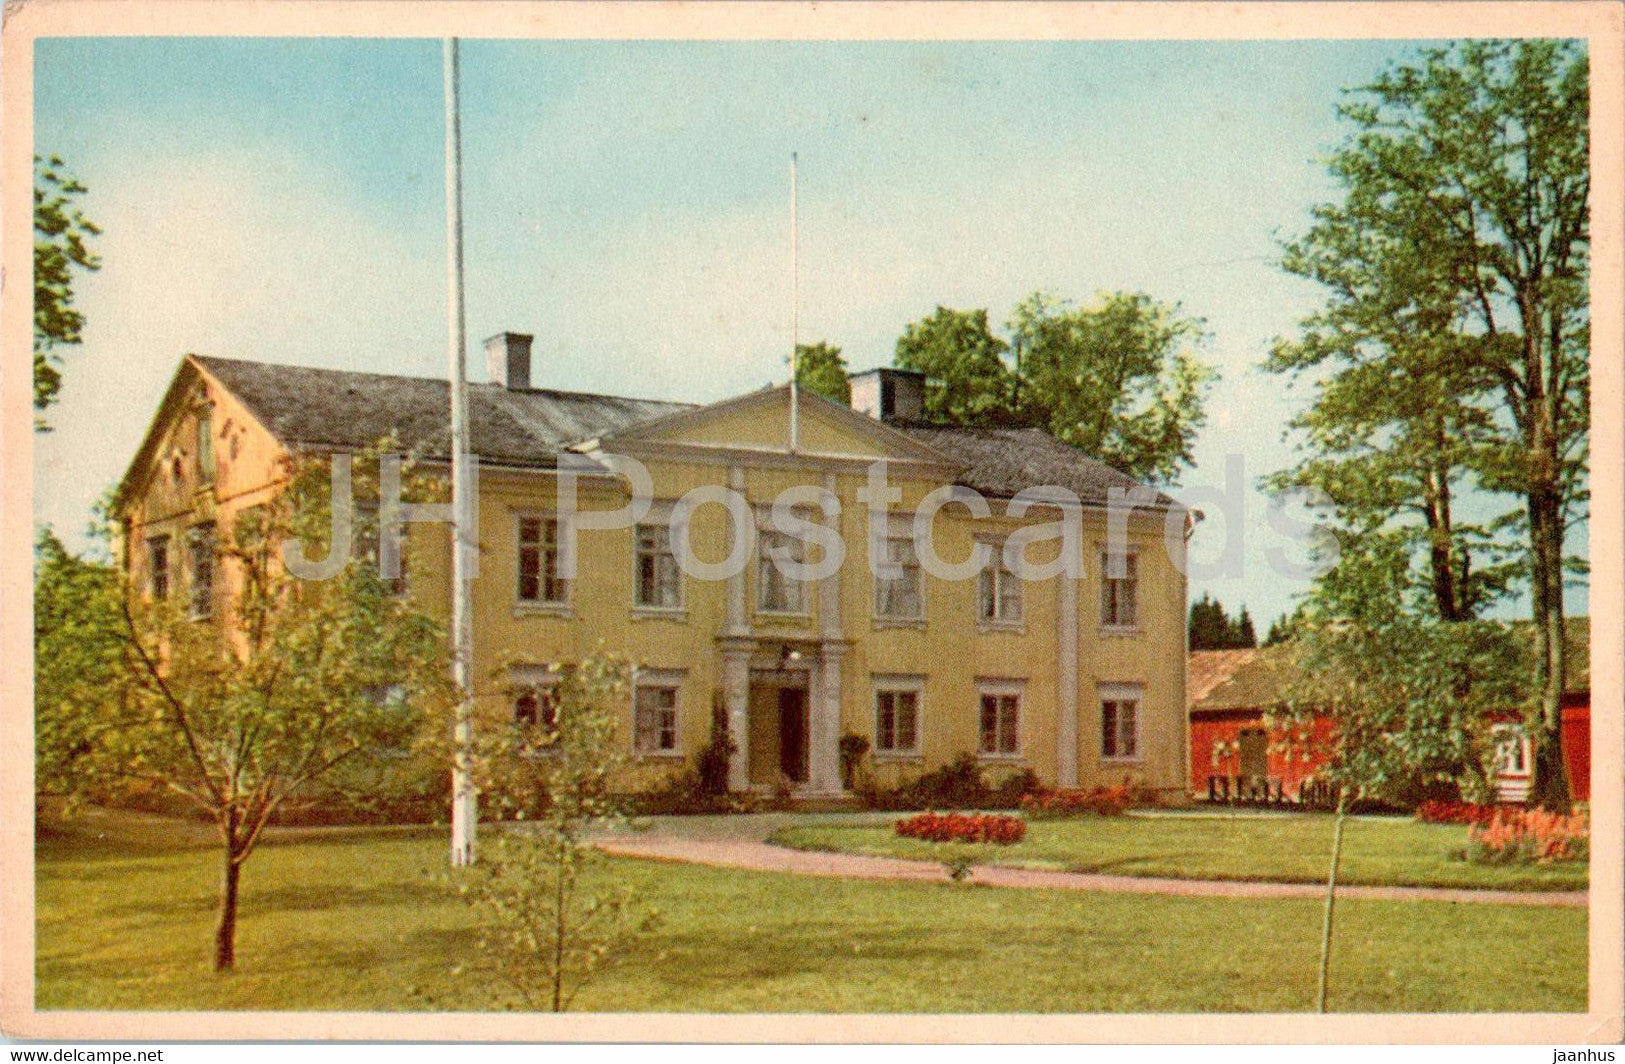 Kalhyttans Turiststation - Filipstad - old postcard - Sweden - unused - JH Postcards